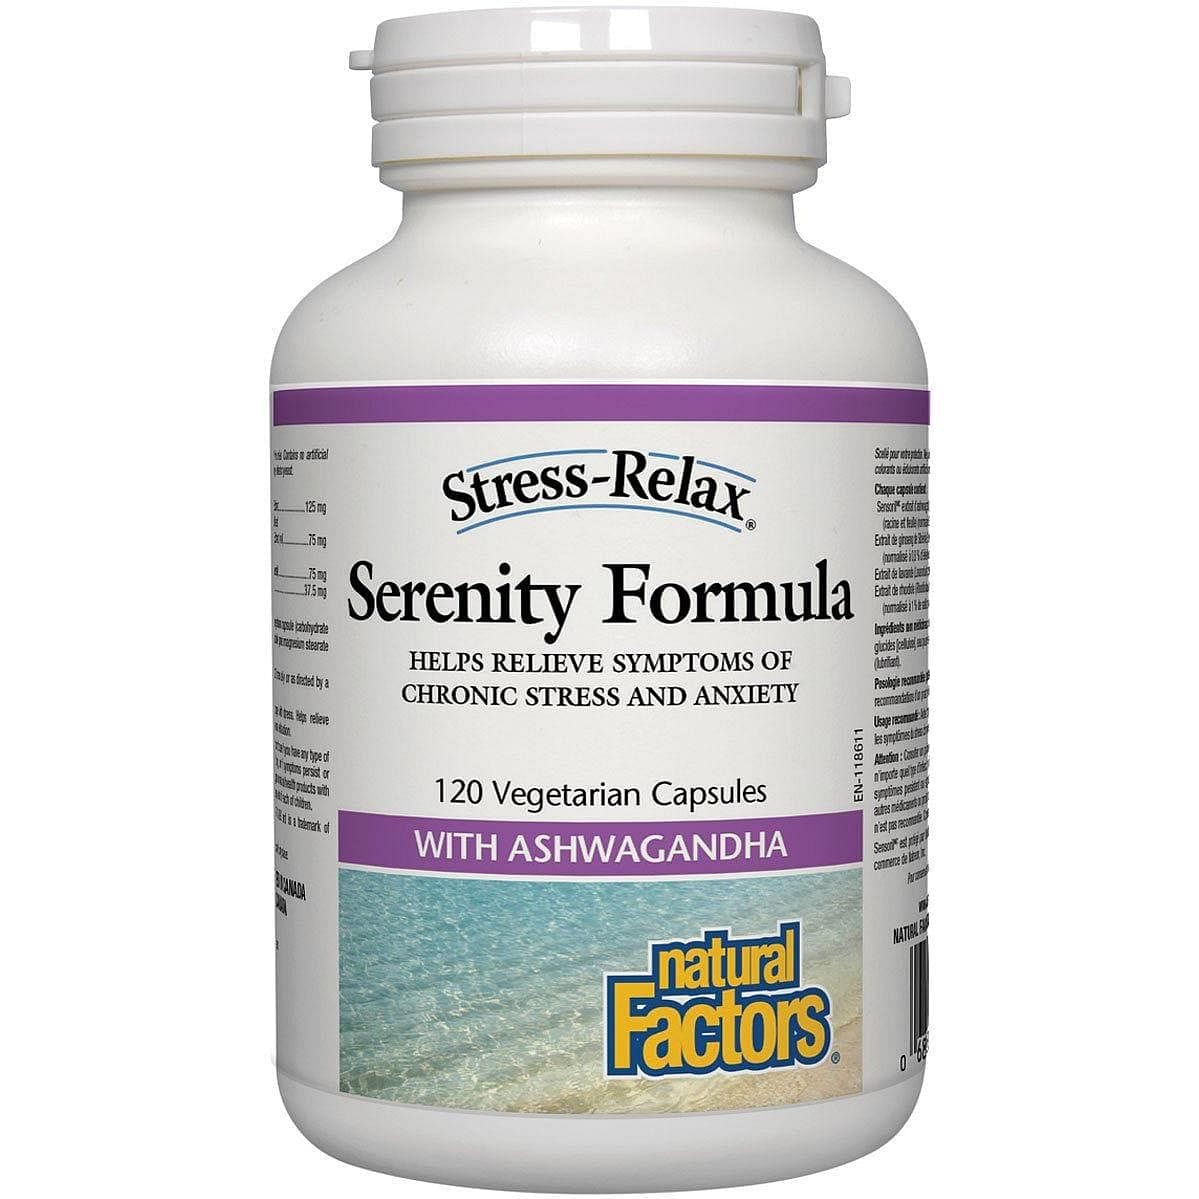 Natural Factors Stress-Relax Serenity Formula, 120 Capsules